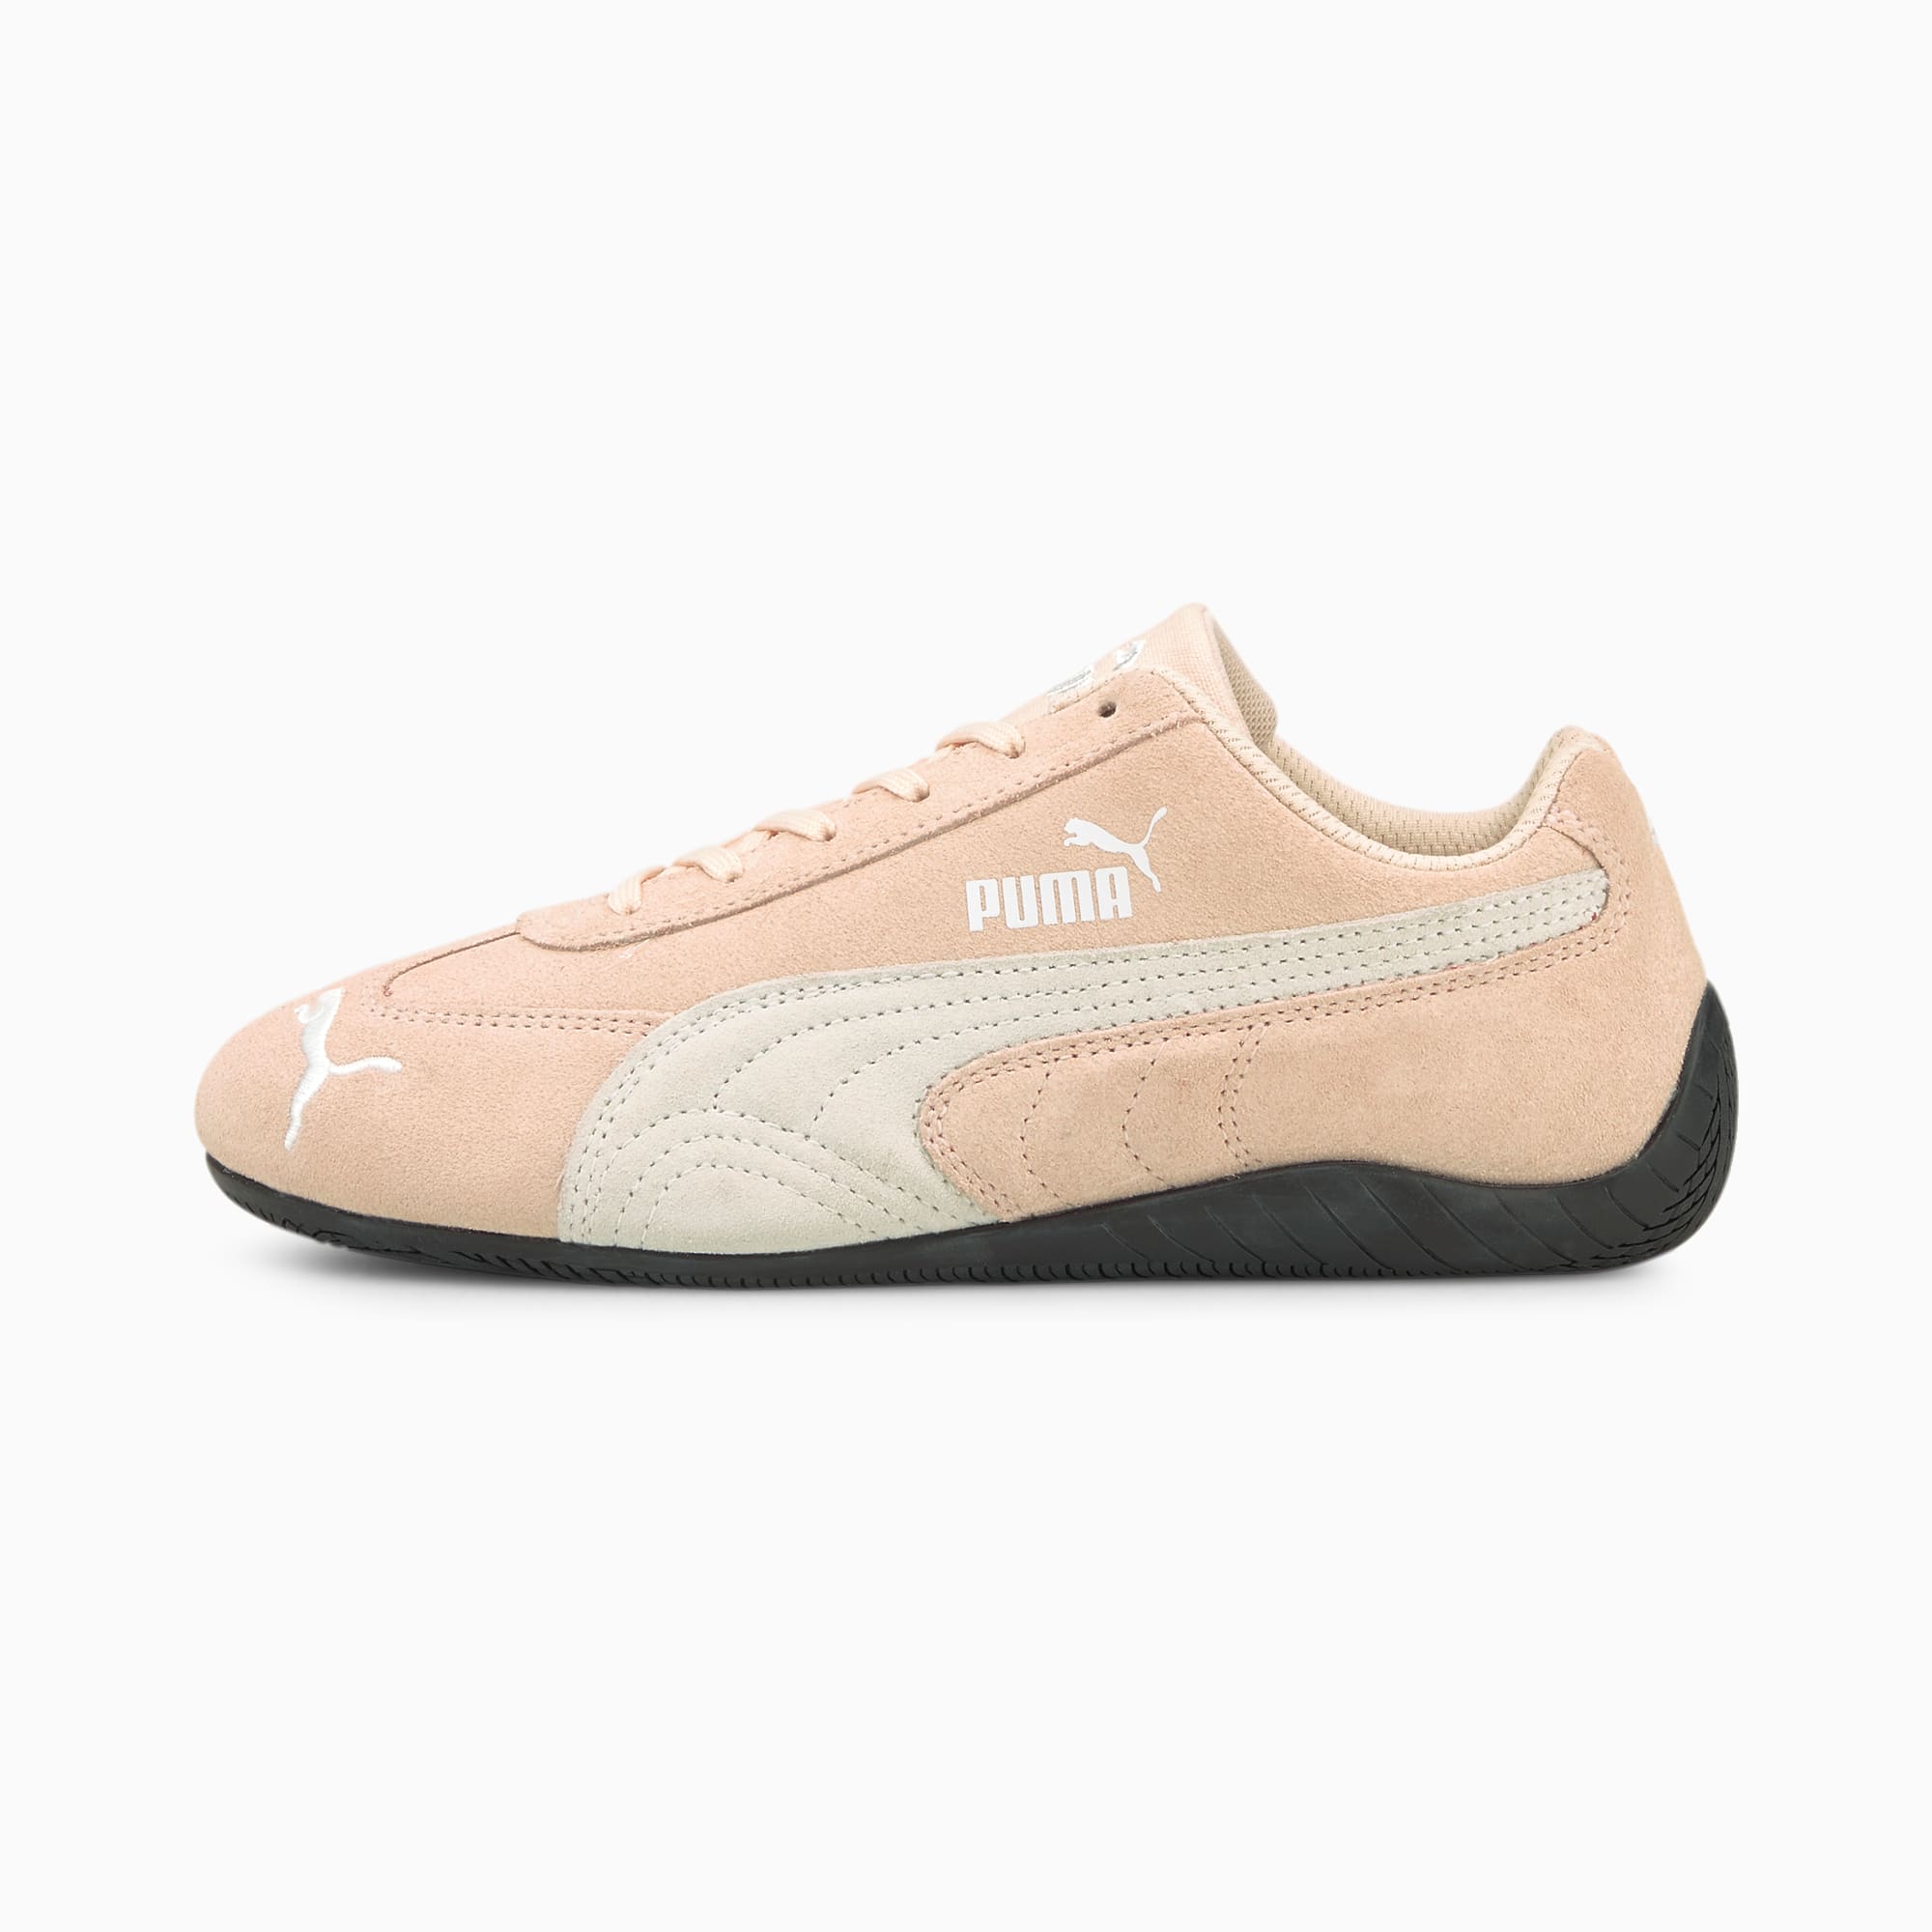 PUMA Chaussure Baskets SpeedCat LS, Rose/Blanc, Taille 37, Chaussures